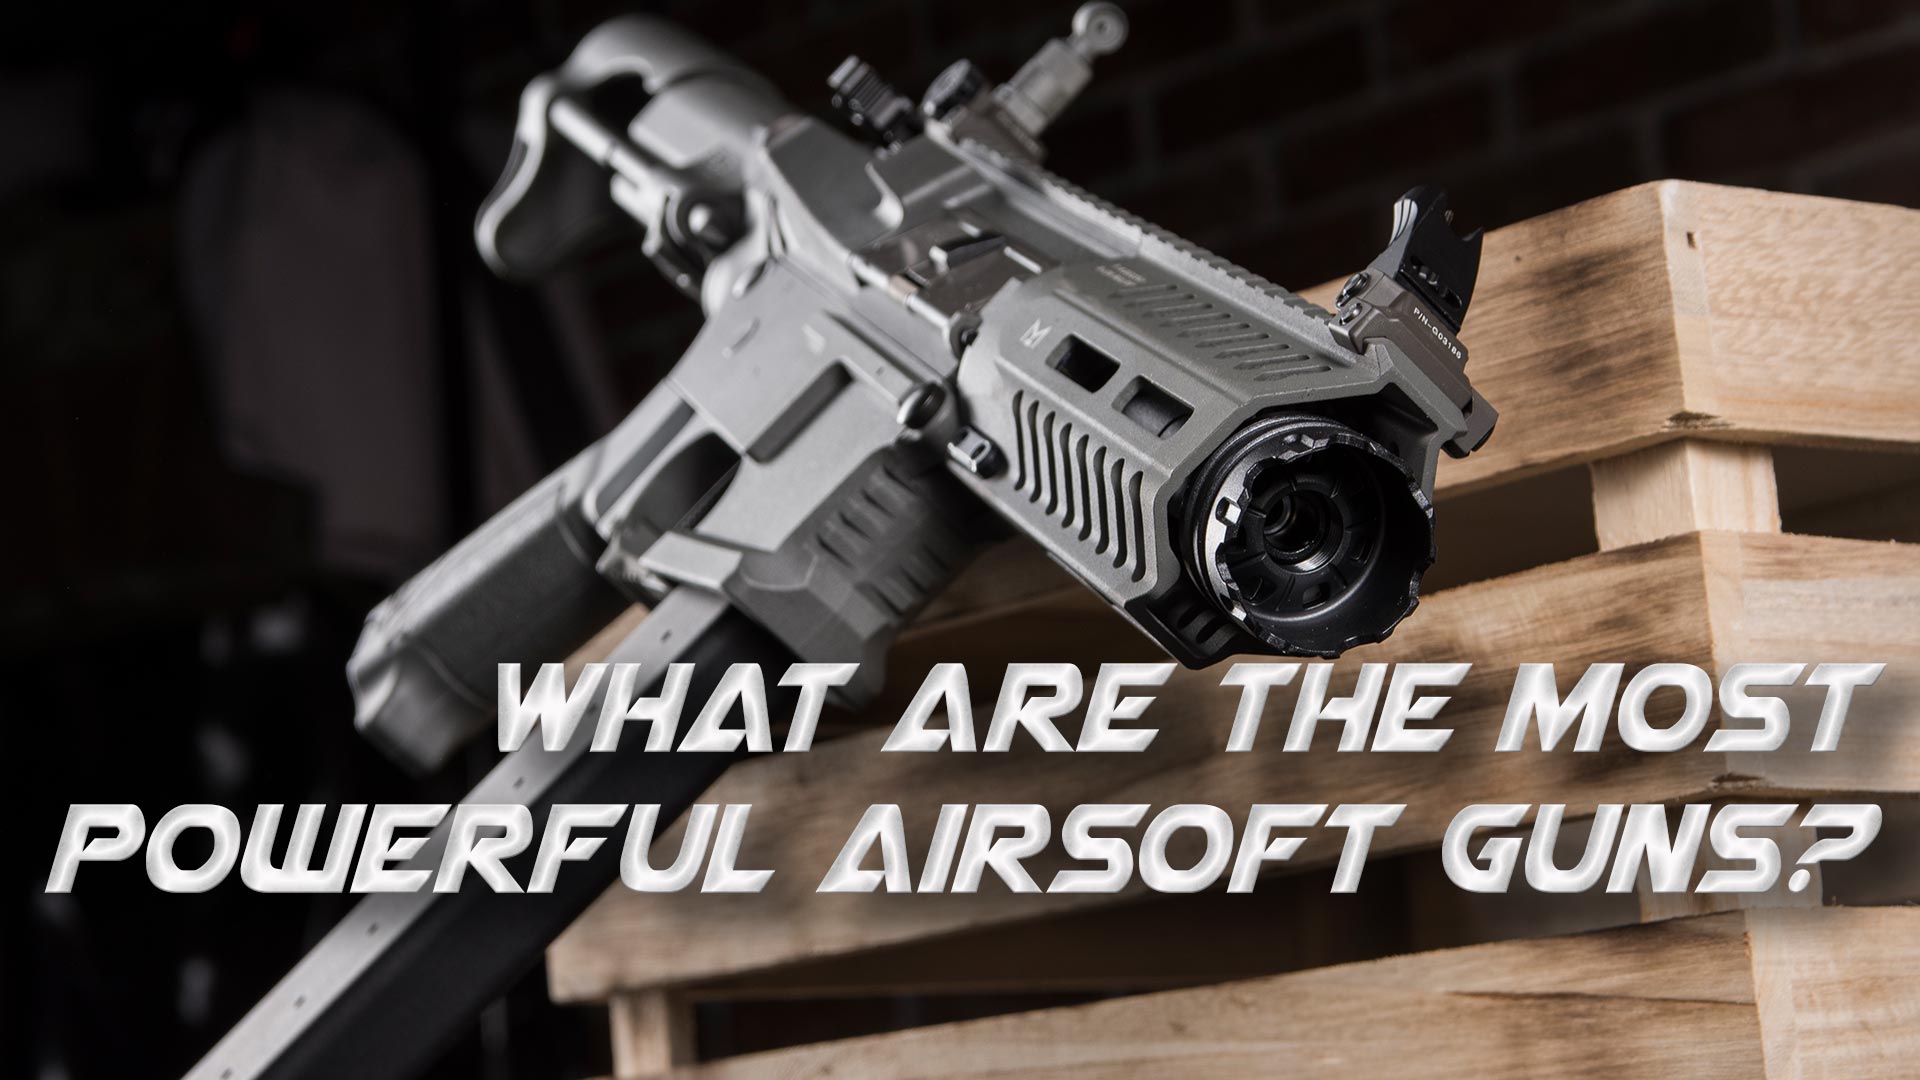 7 PC AIRSOFT GUNS SET SPRING SNIPER RIFLE HAND PISTOLS w/ 1000 6mm BB BBs  Lot